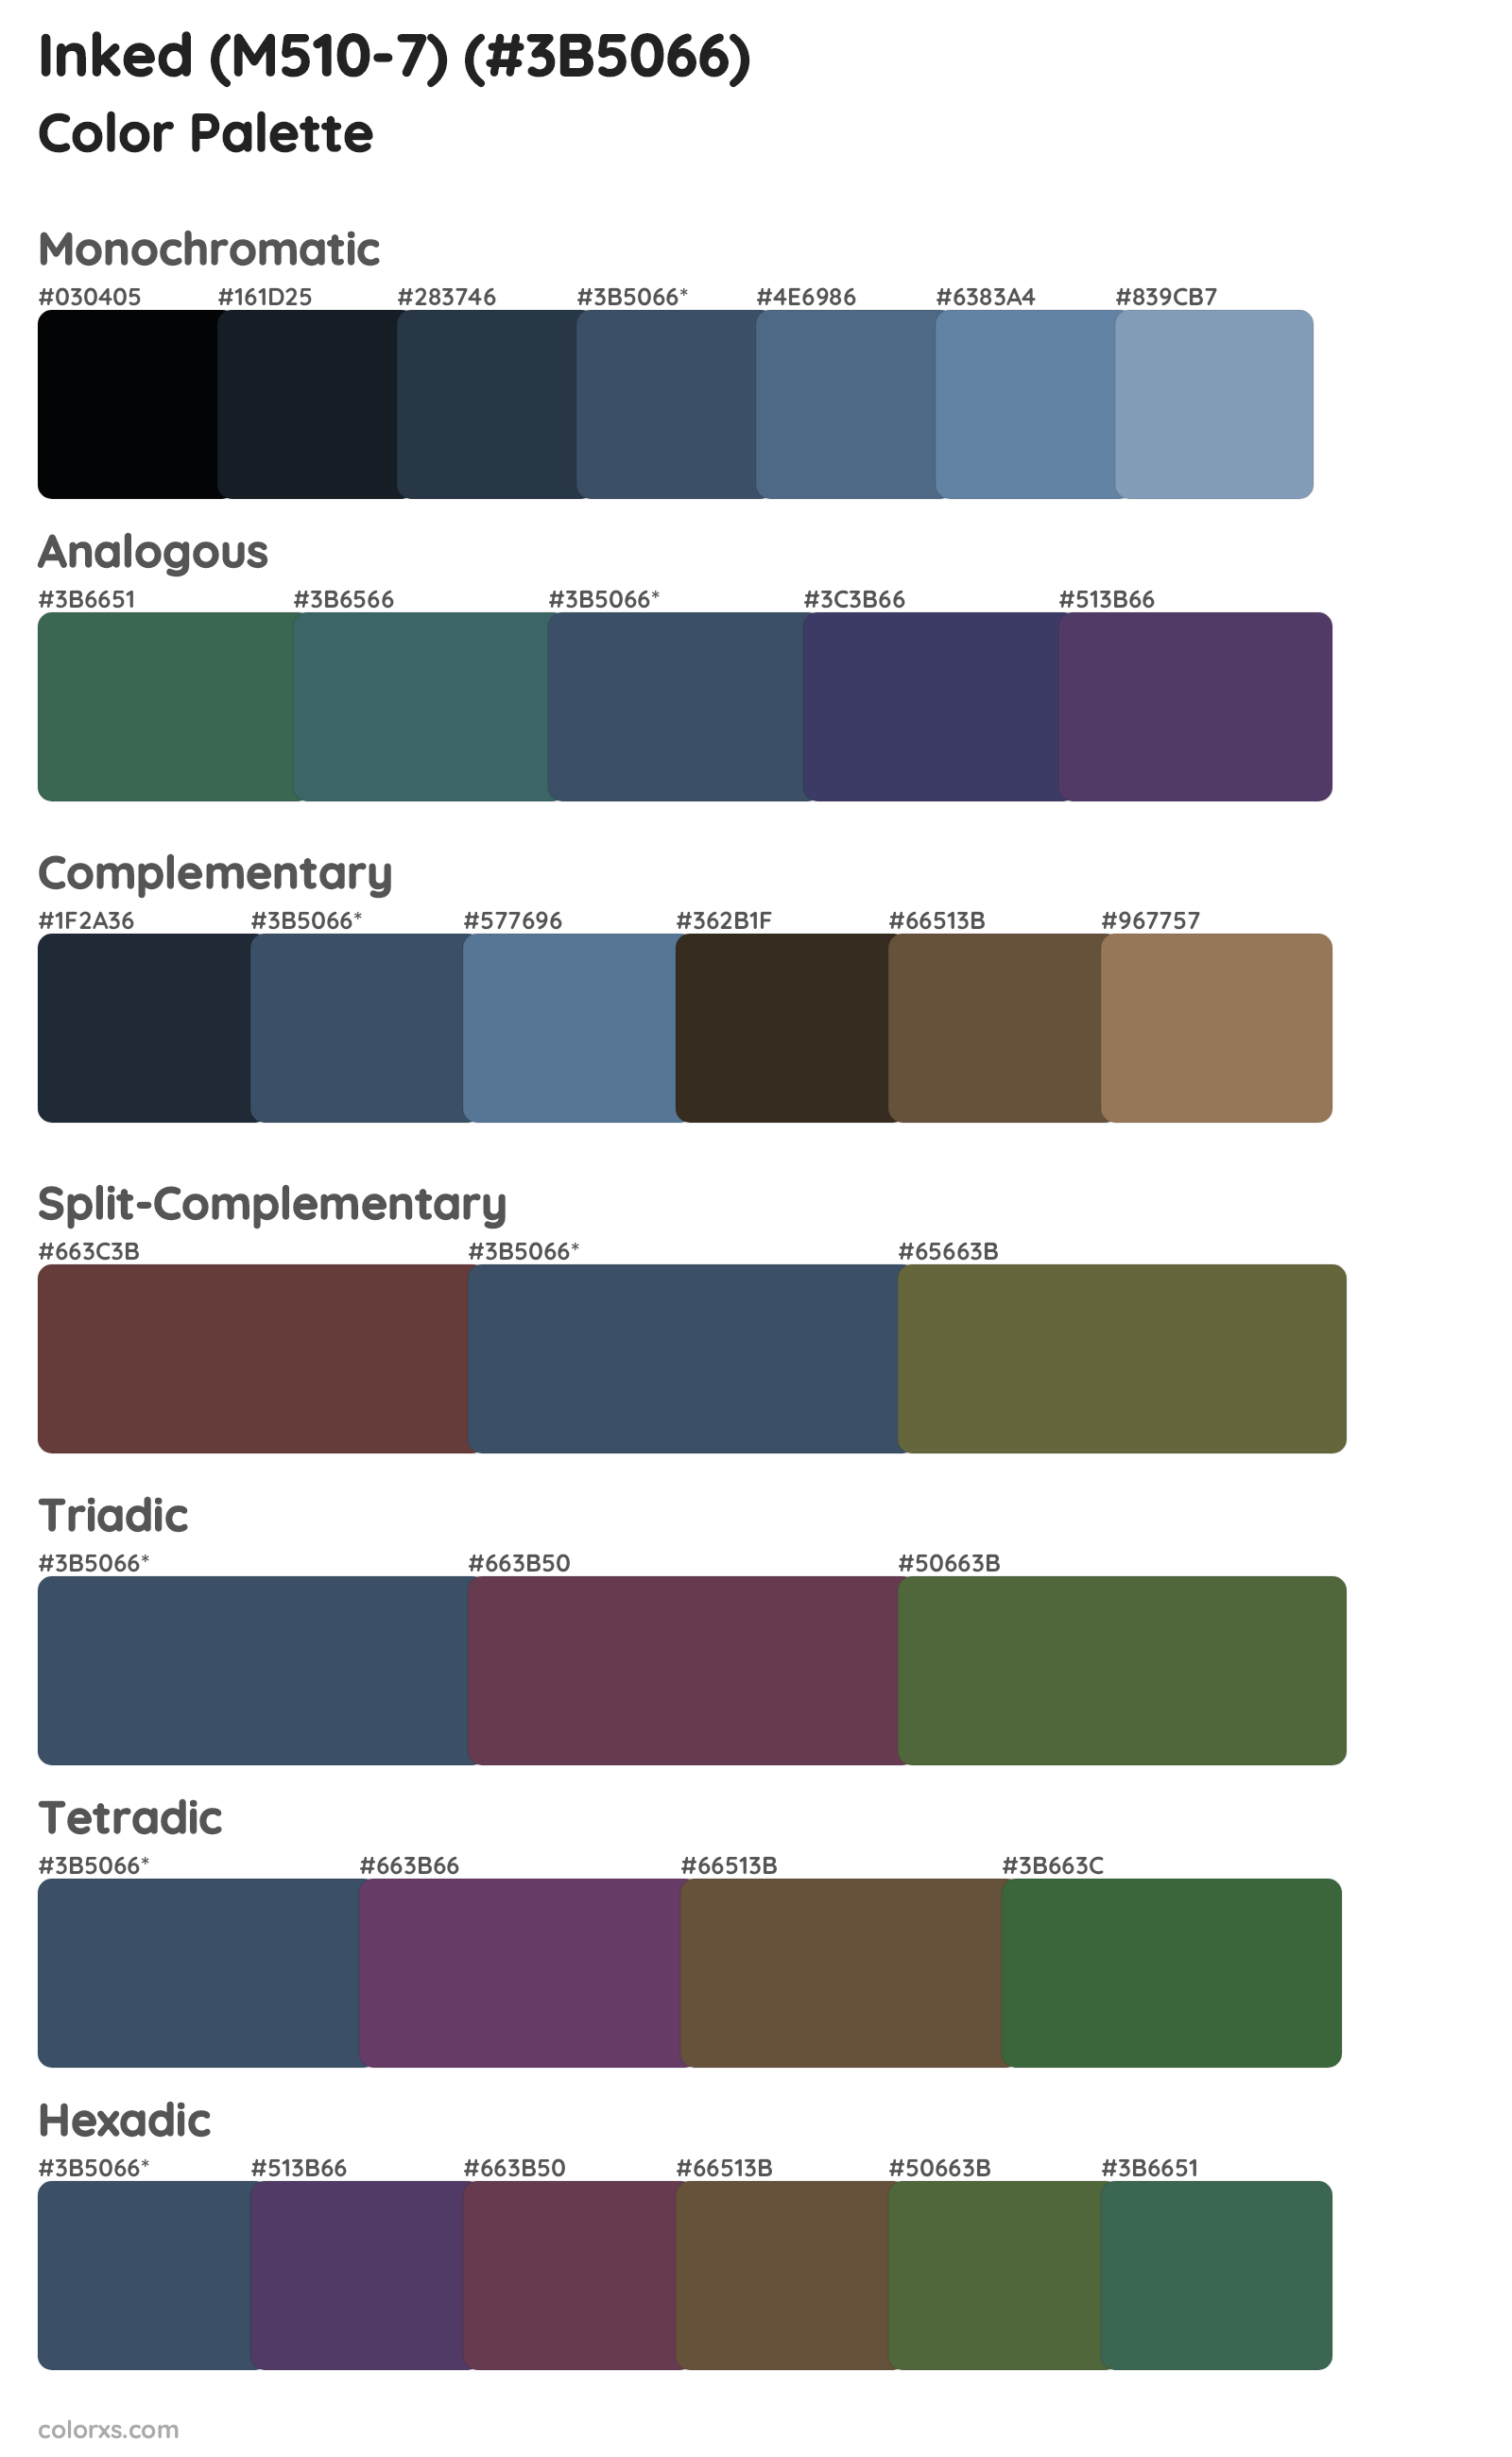 Inked (M510-7) Color Scheme Palettes